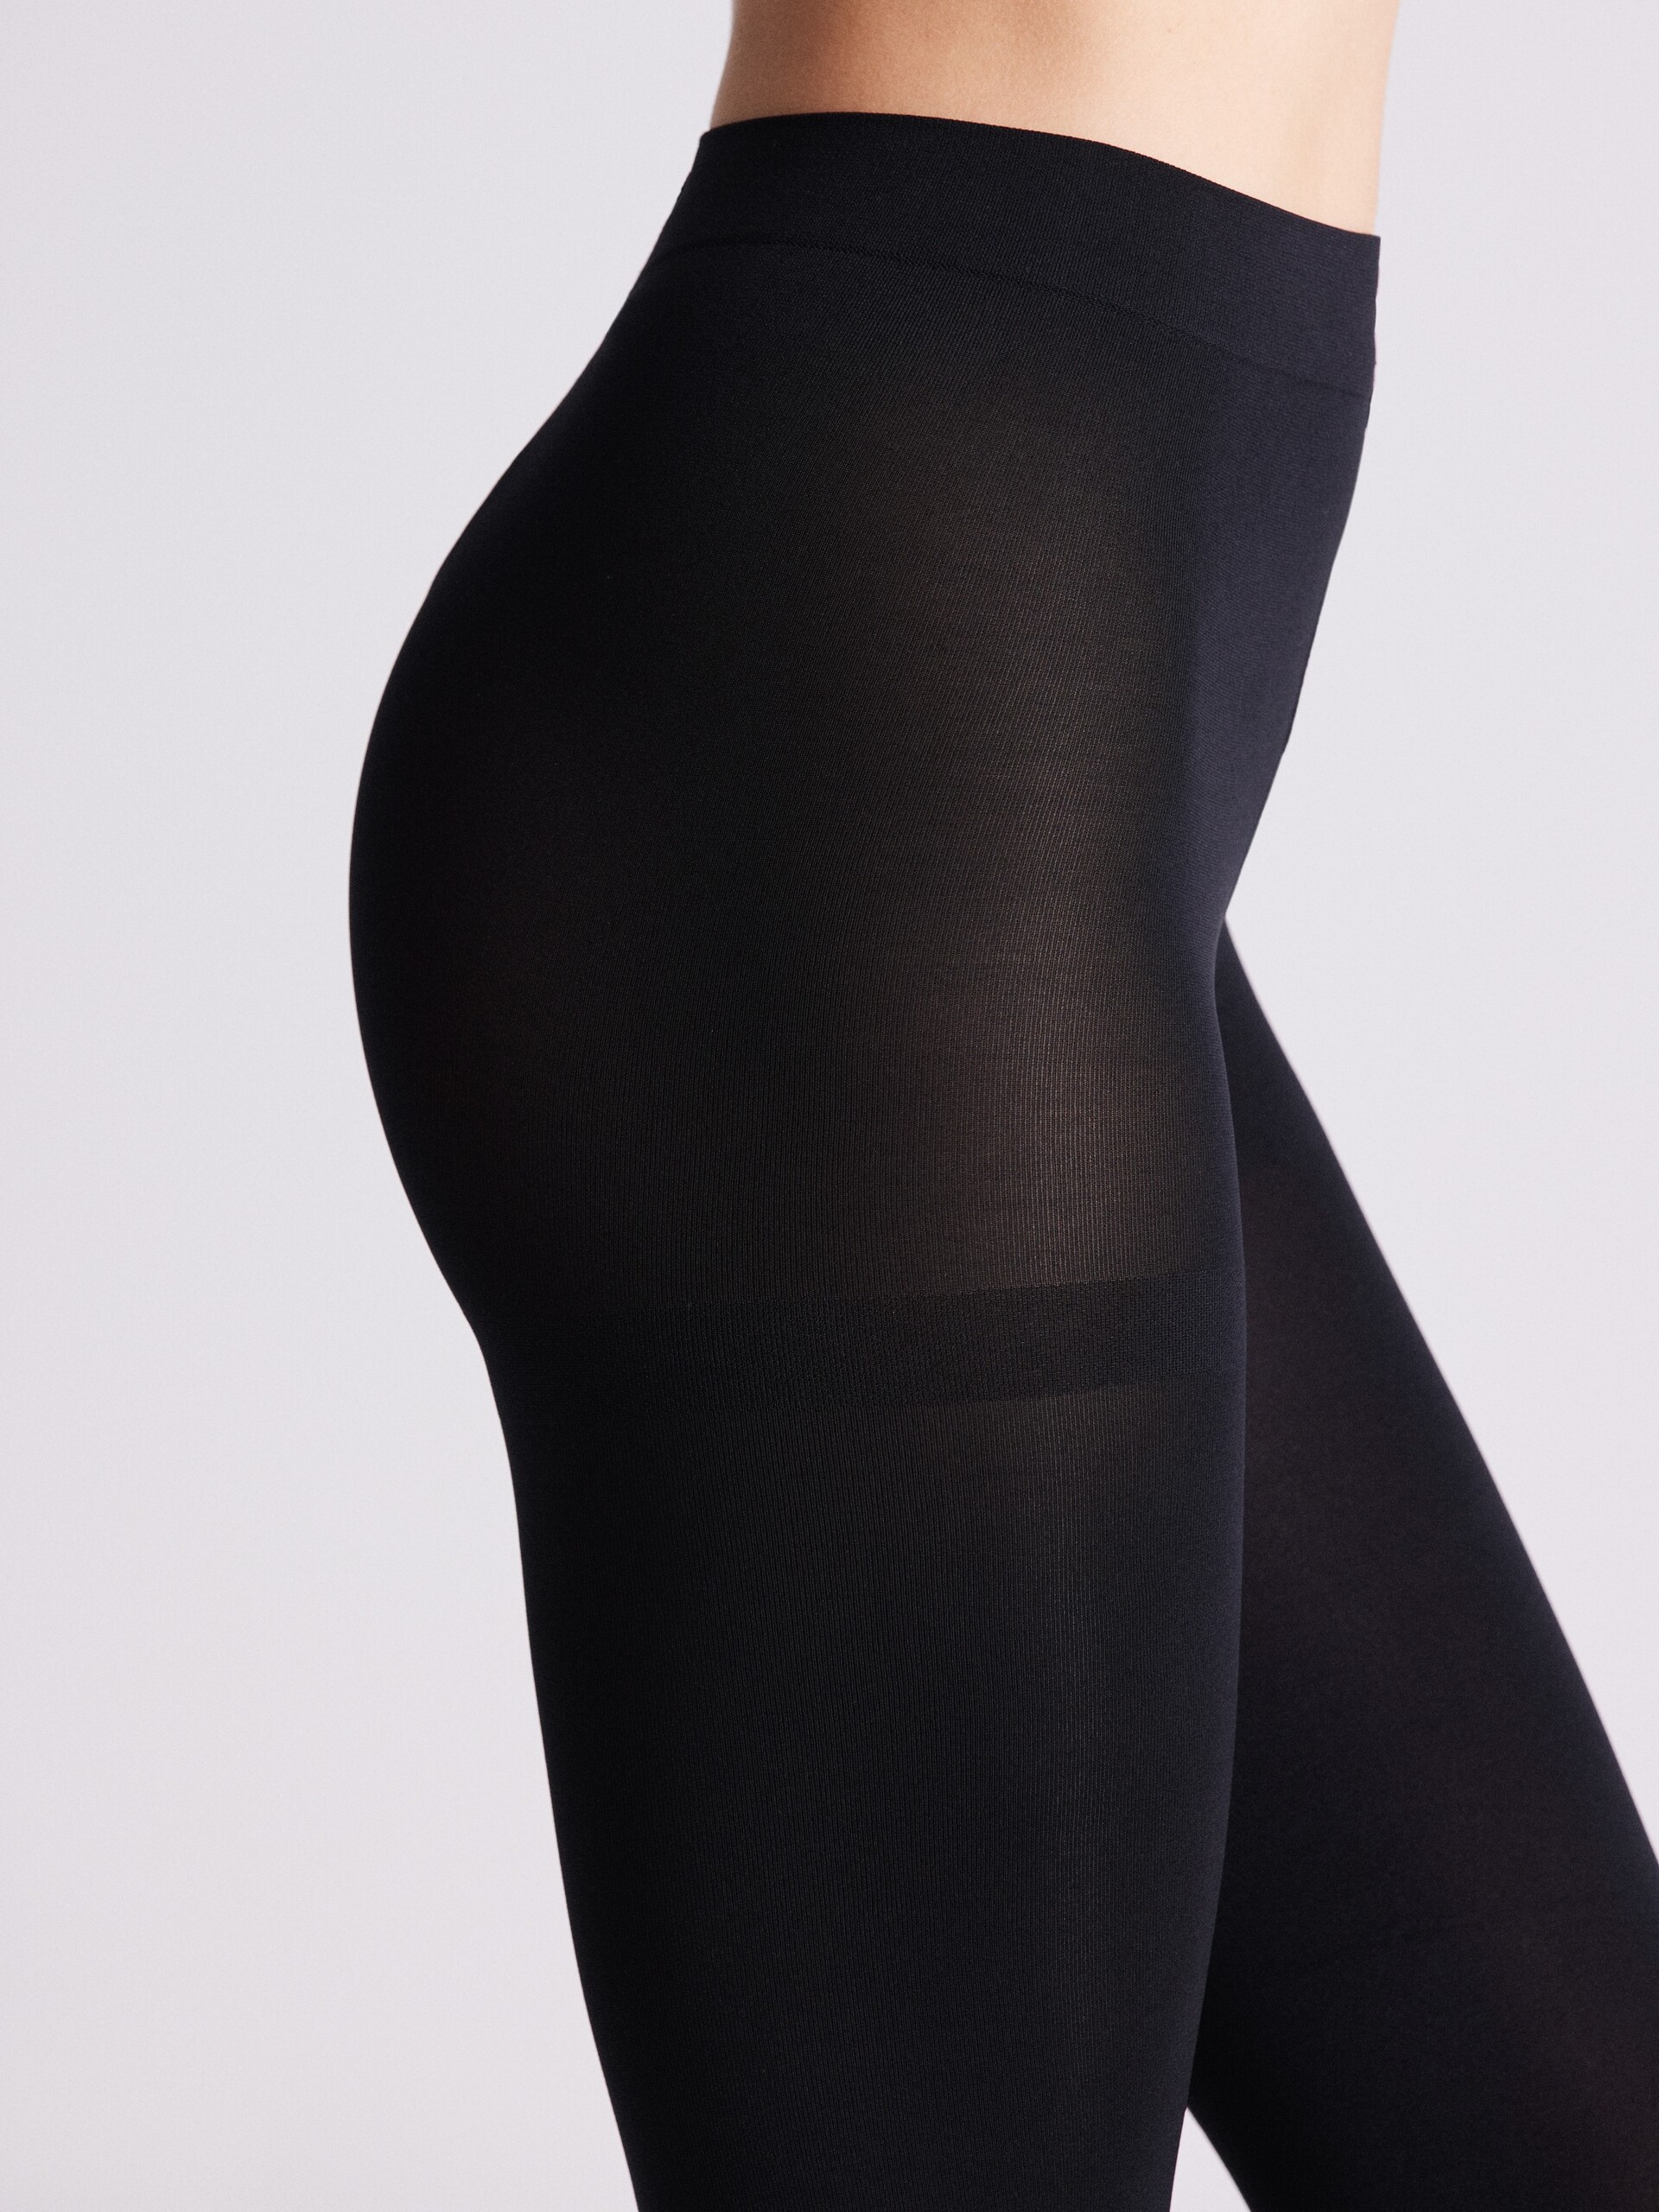 Black high-waist shaping leggings – Ysabel Mora